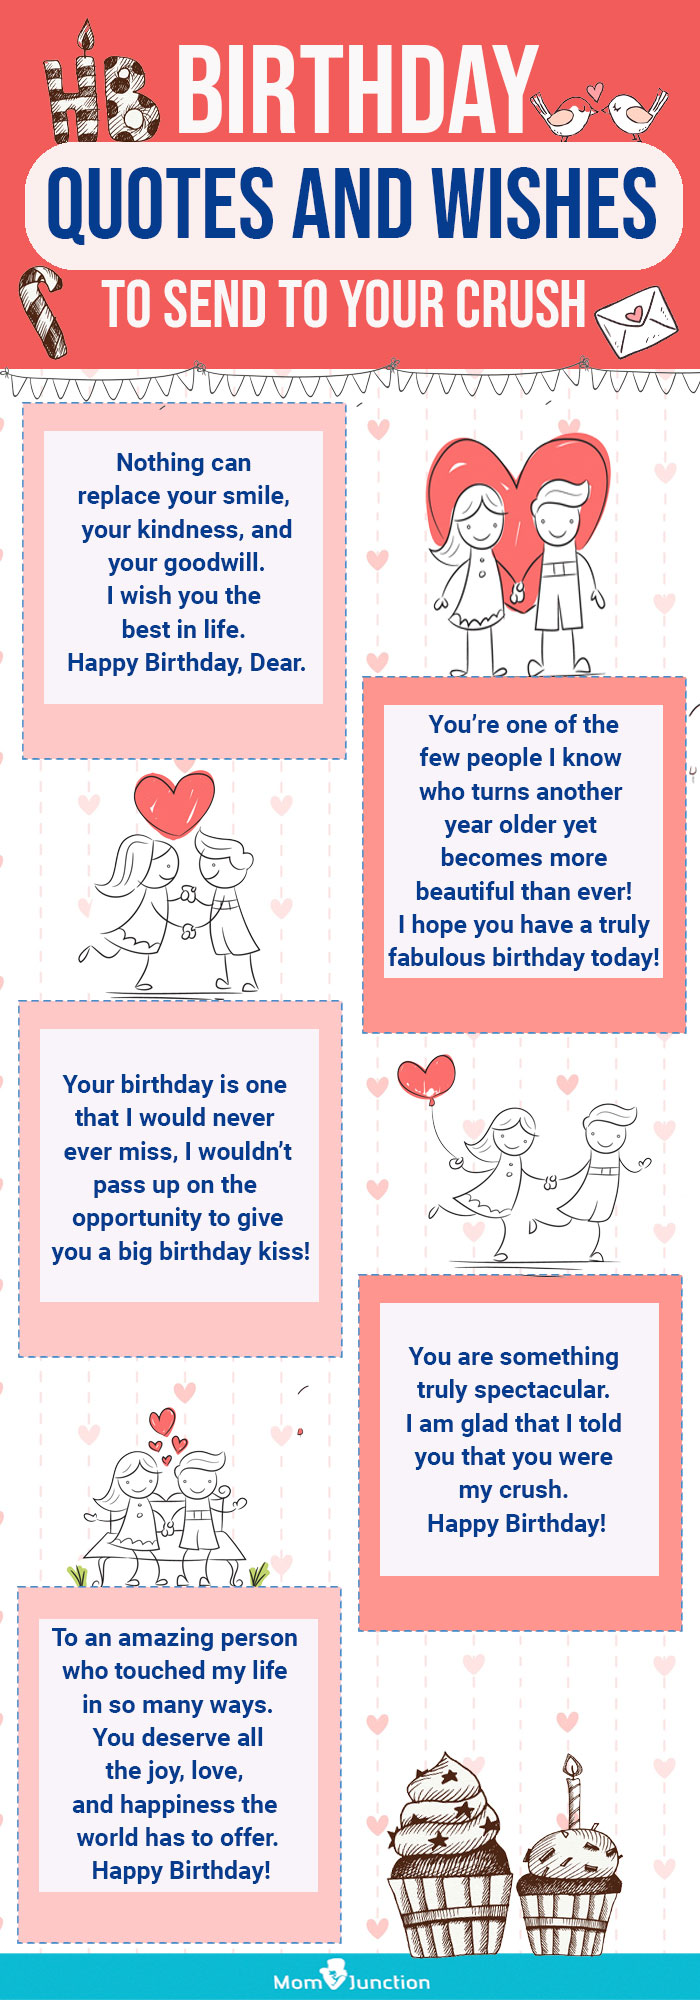 Best Friend Birthday Gifts for Women, Funny BFF Pink 01 | eBay